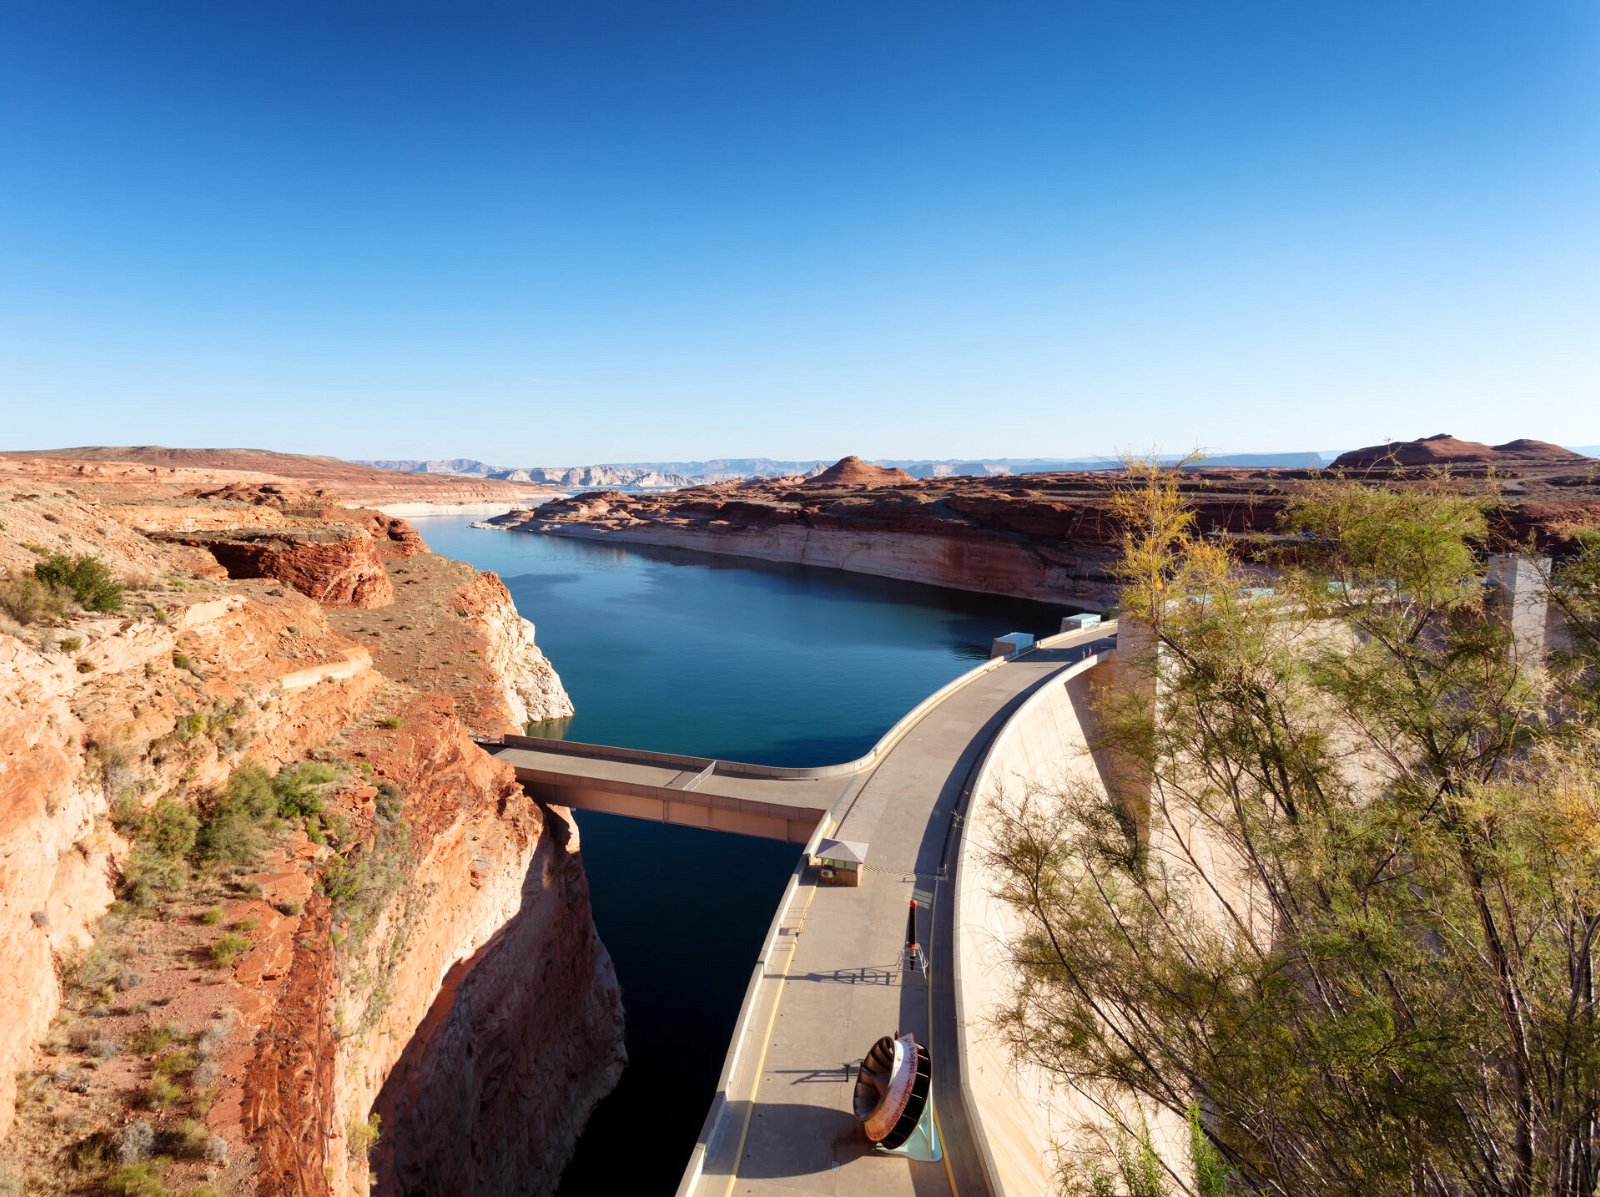 Glen Canyon hydropower Dam on the Colorado River in Arizona